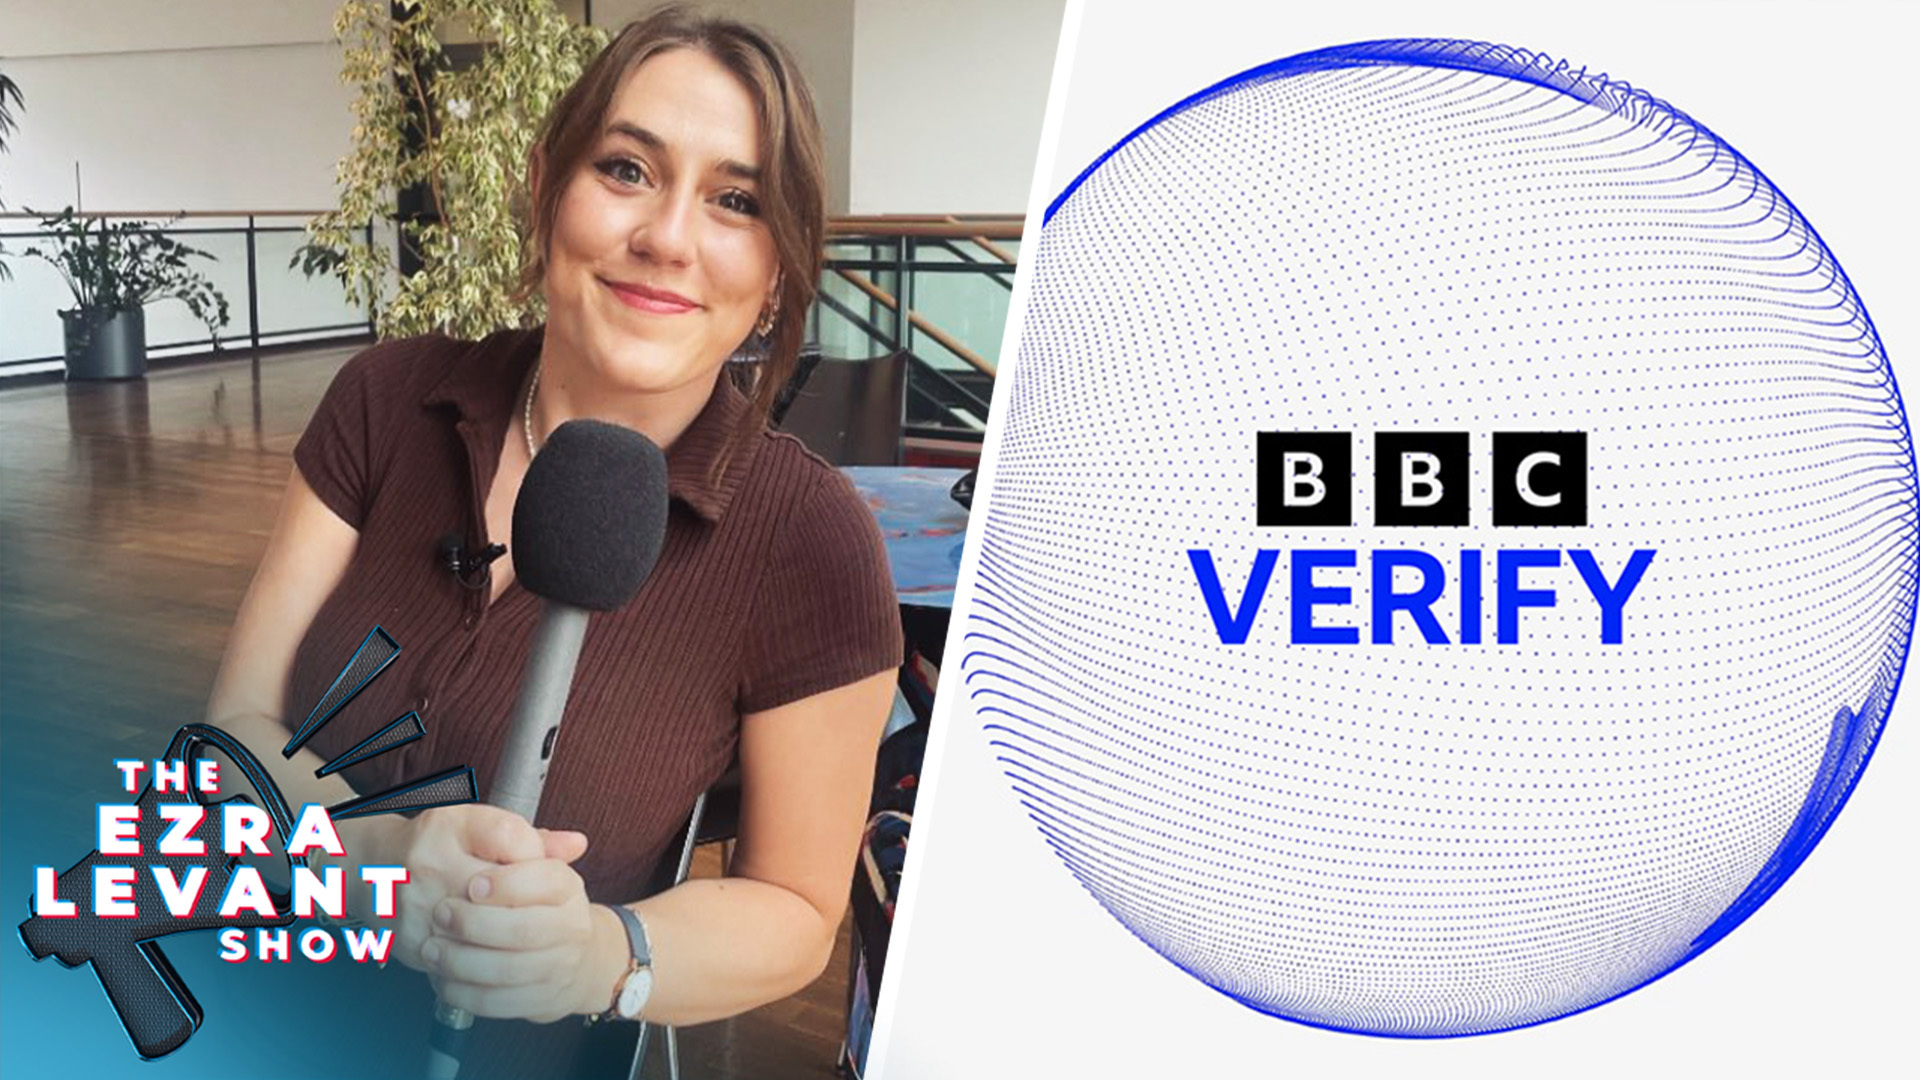 BBC-Verify- BBC is Hilarious- Igor Beuker - Keynote Speaker 